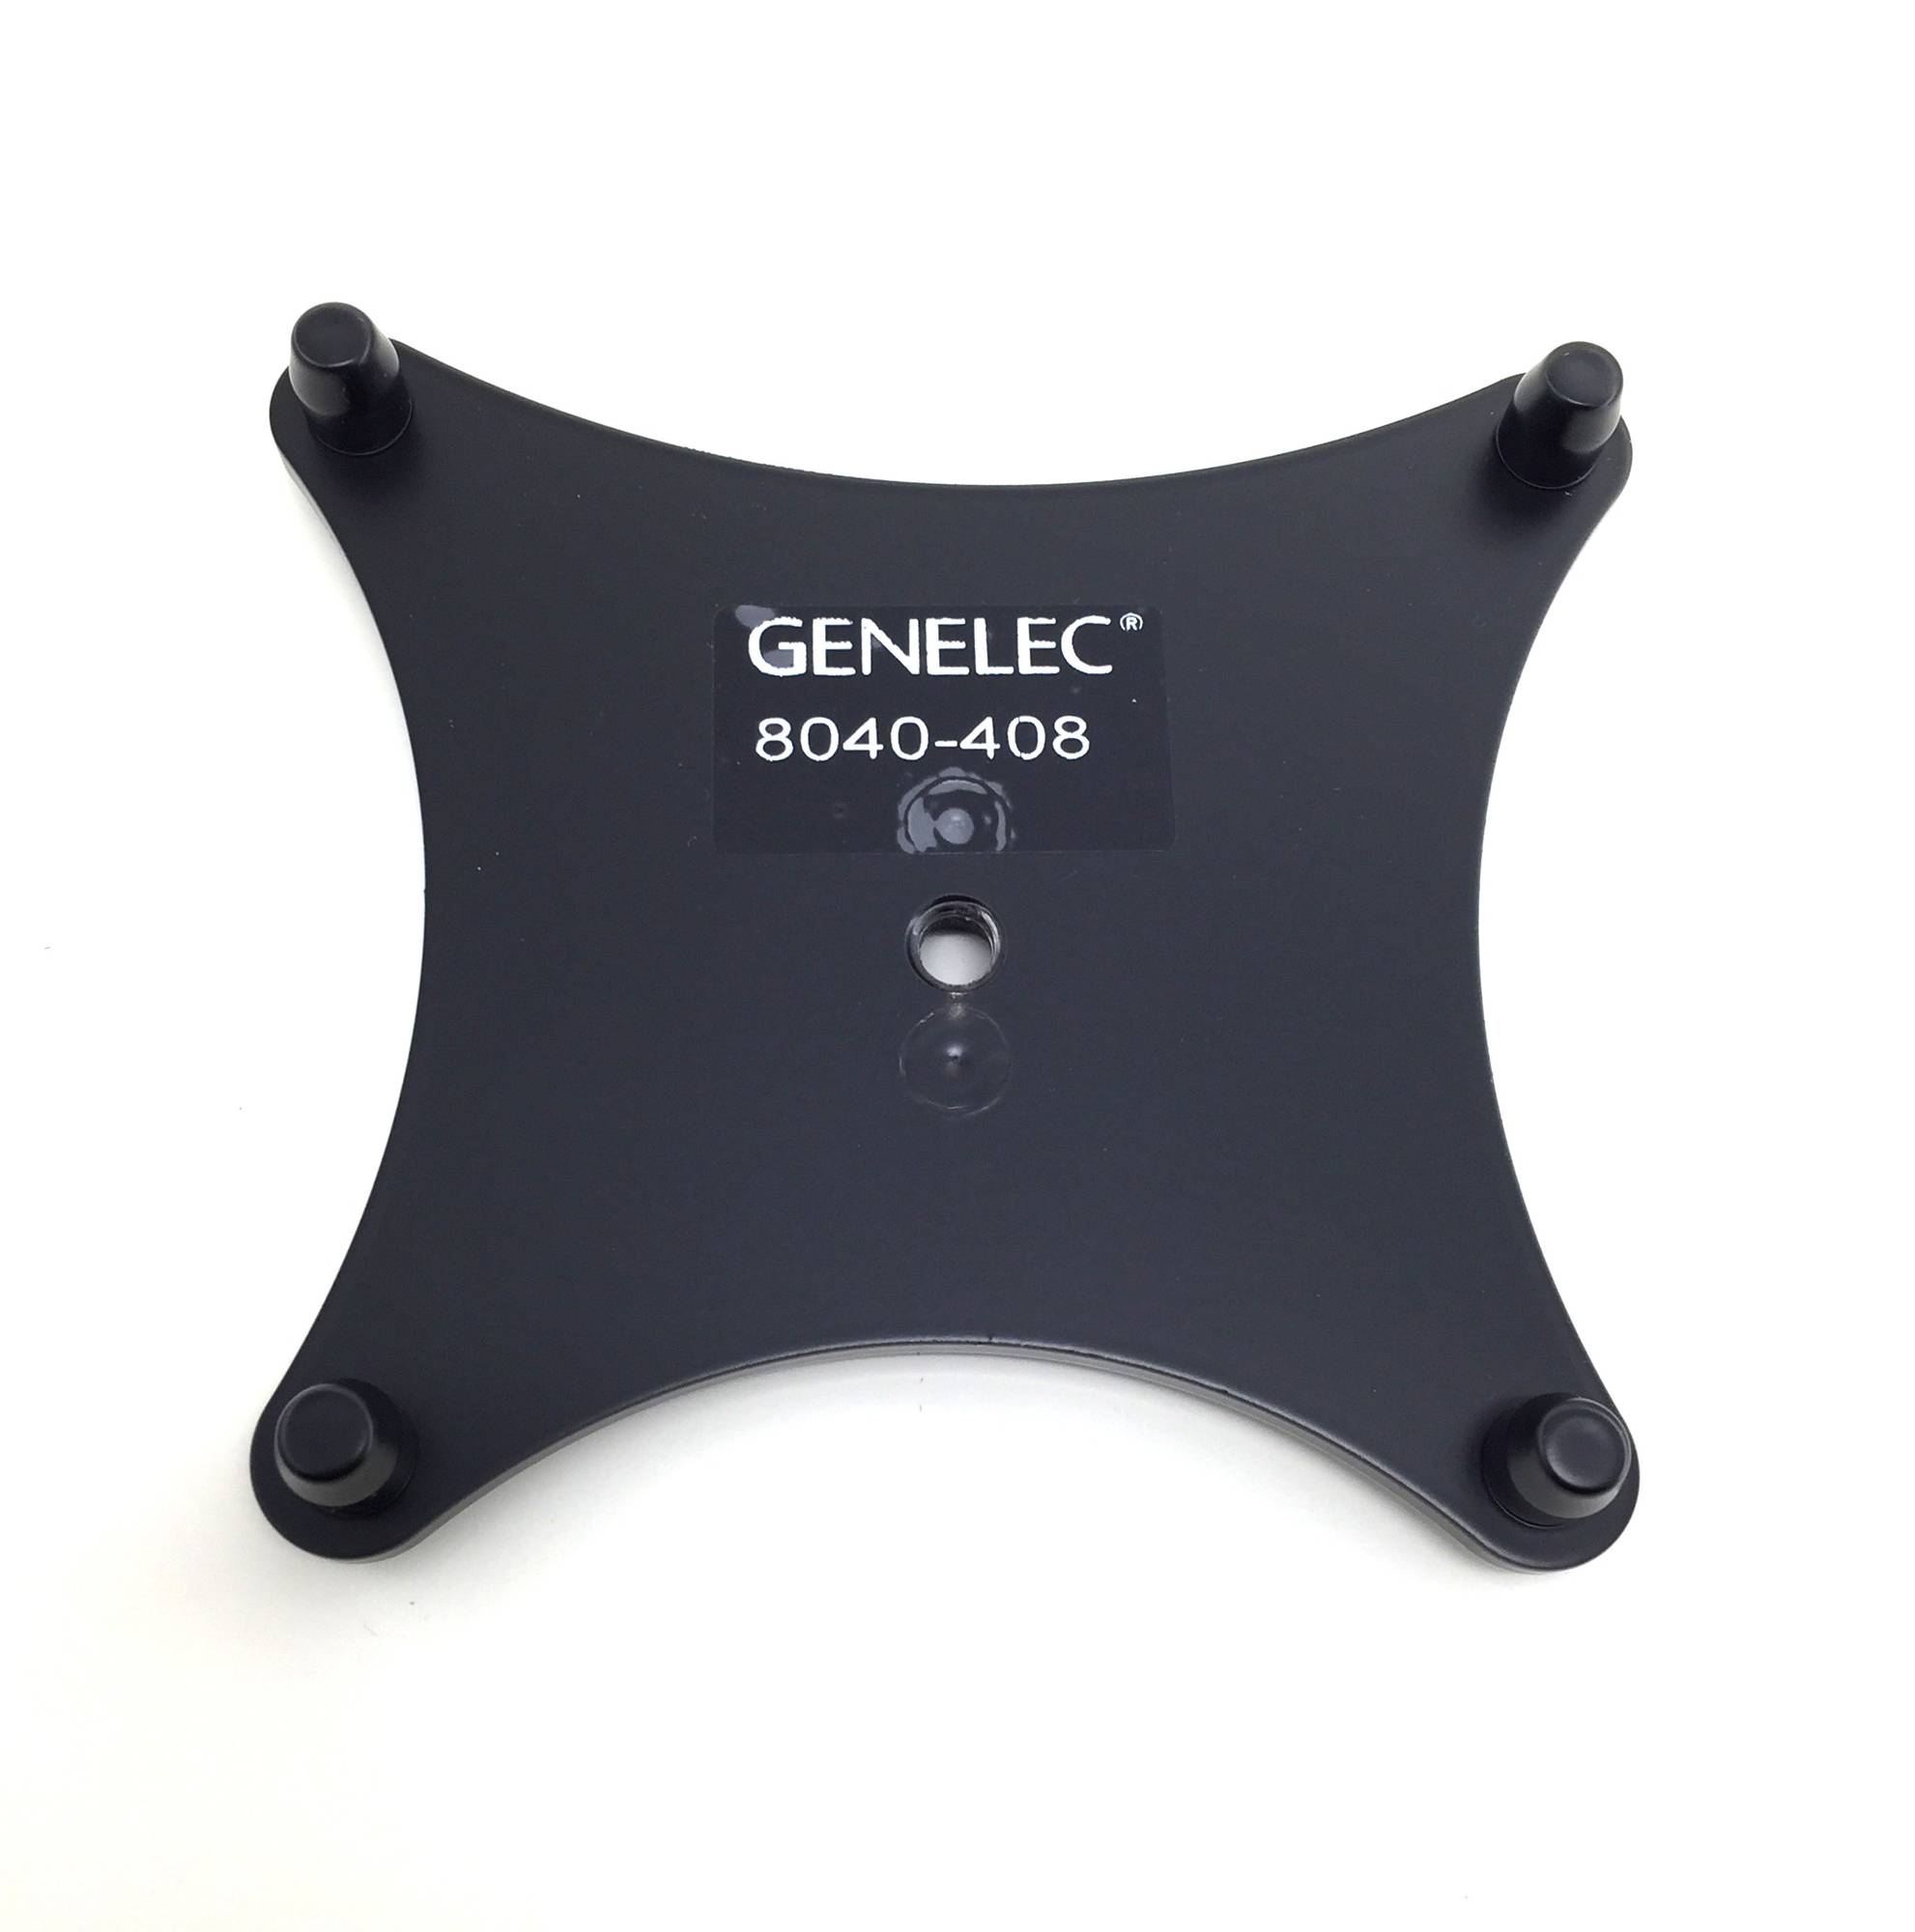 Genelec 8040-408 (120x80)